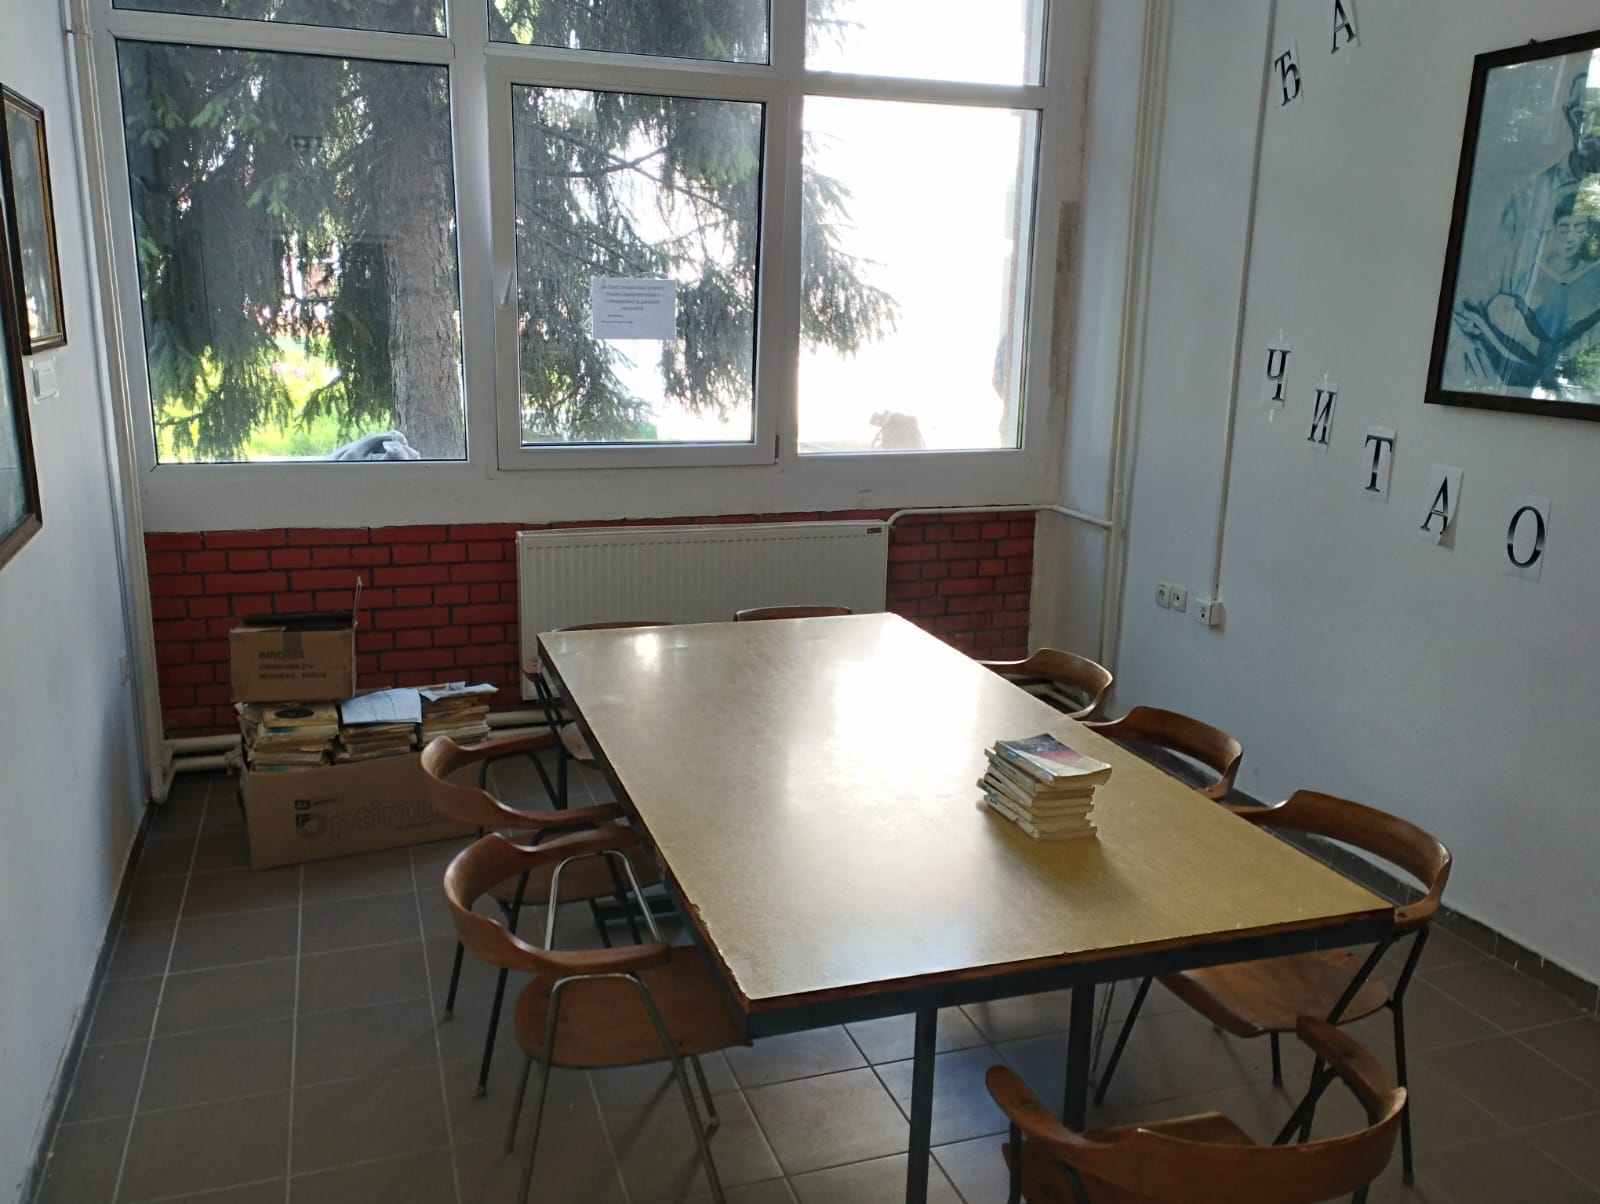 Classroom Image 1